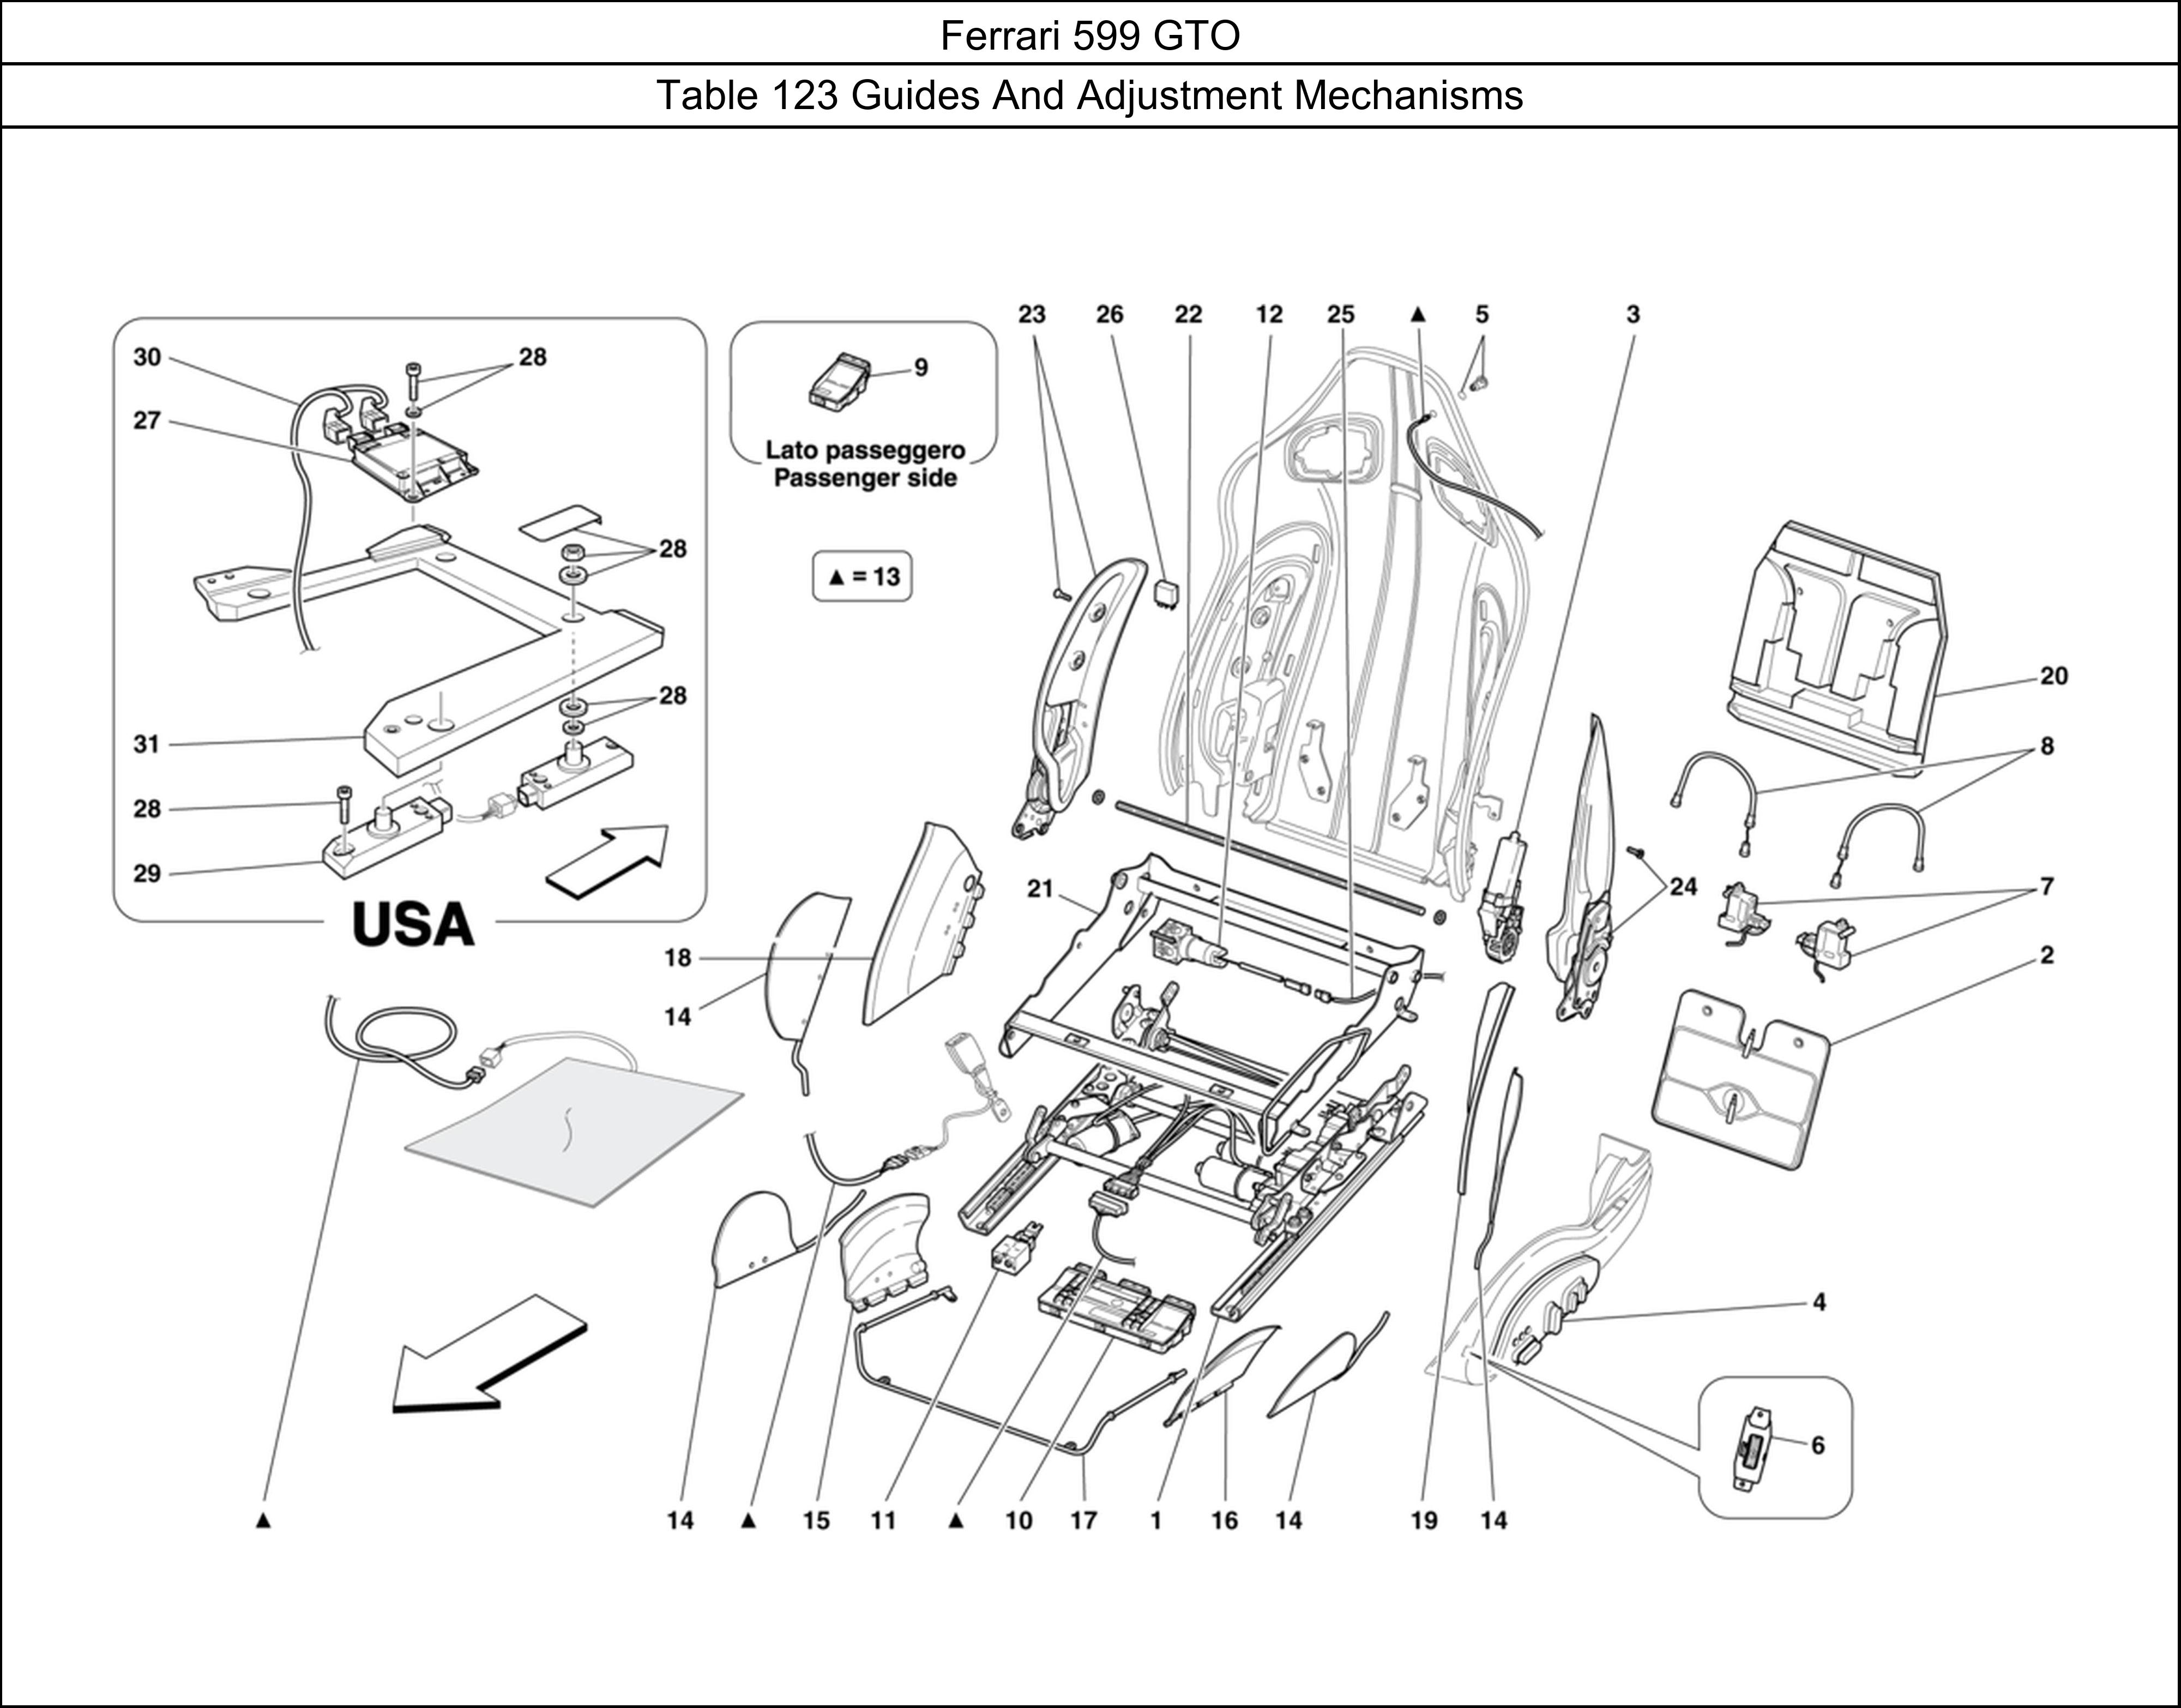 Ferrari Parts Ferrari 599 GTO Table 123 Guides And Adjustment Mechanisms